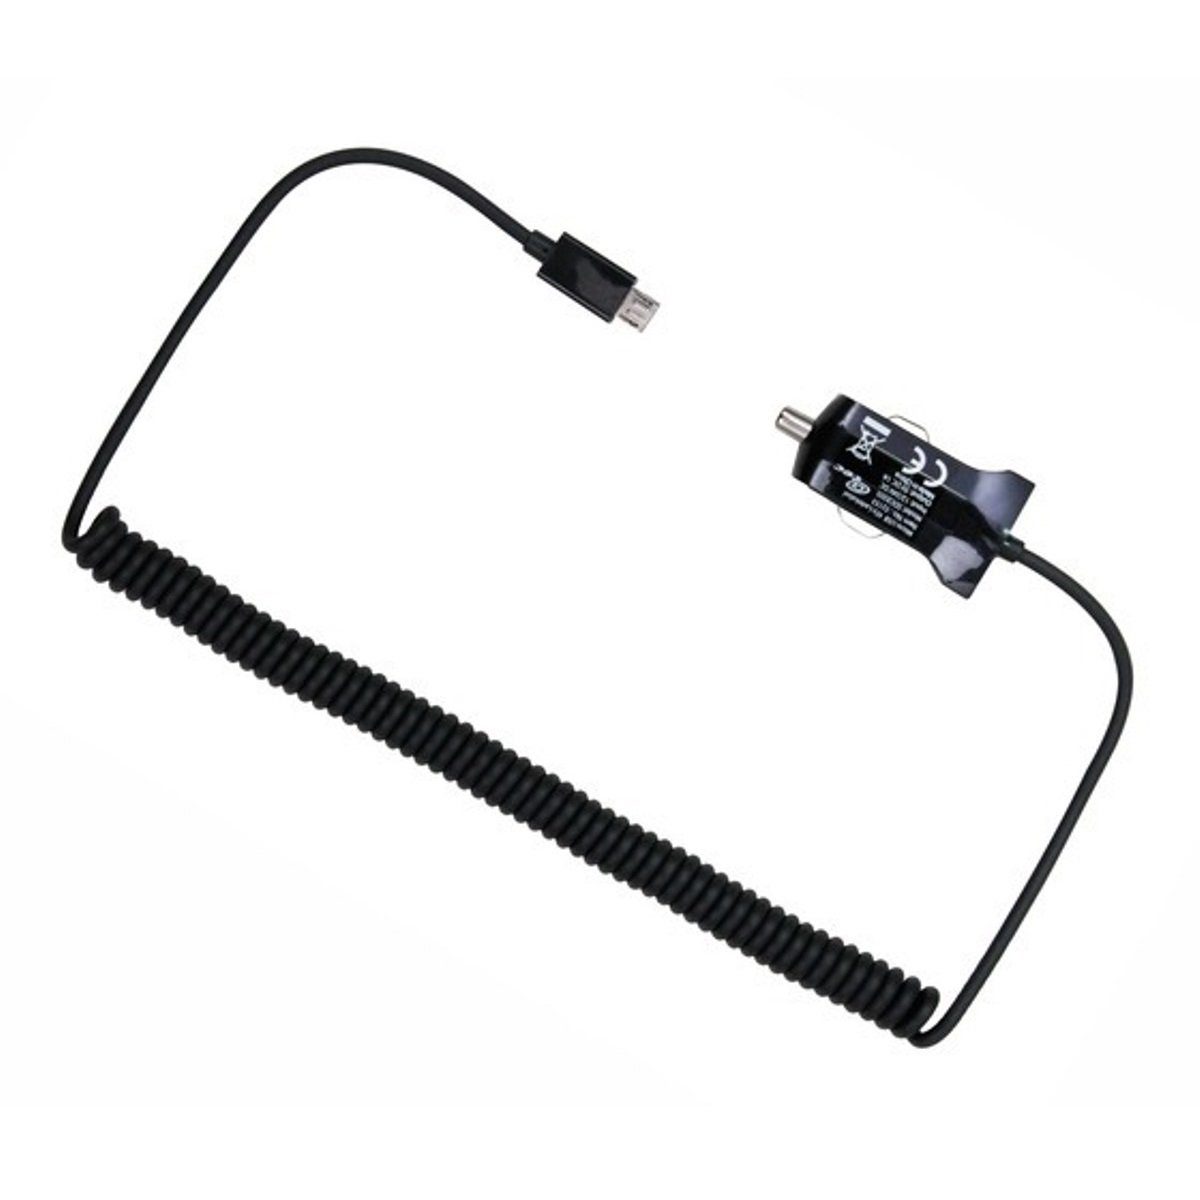 AIV KFZ 12V 24V Ladekabel Micro-USB Spiral-Kabel Smartphone-Kabel,  micro-USB, Lade-Adapter für PKW Auto LKW Wohnmobil NFZ, für Handy, Navi,  etc.